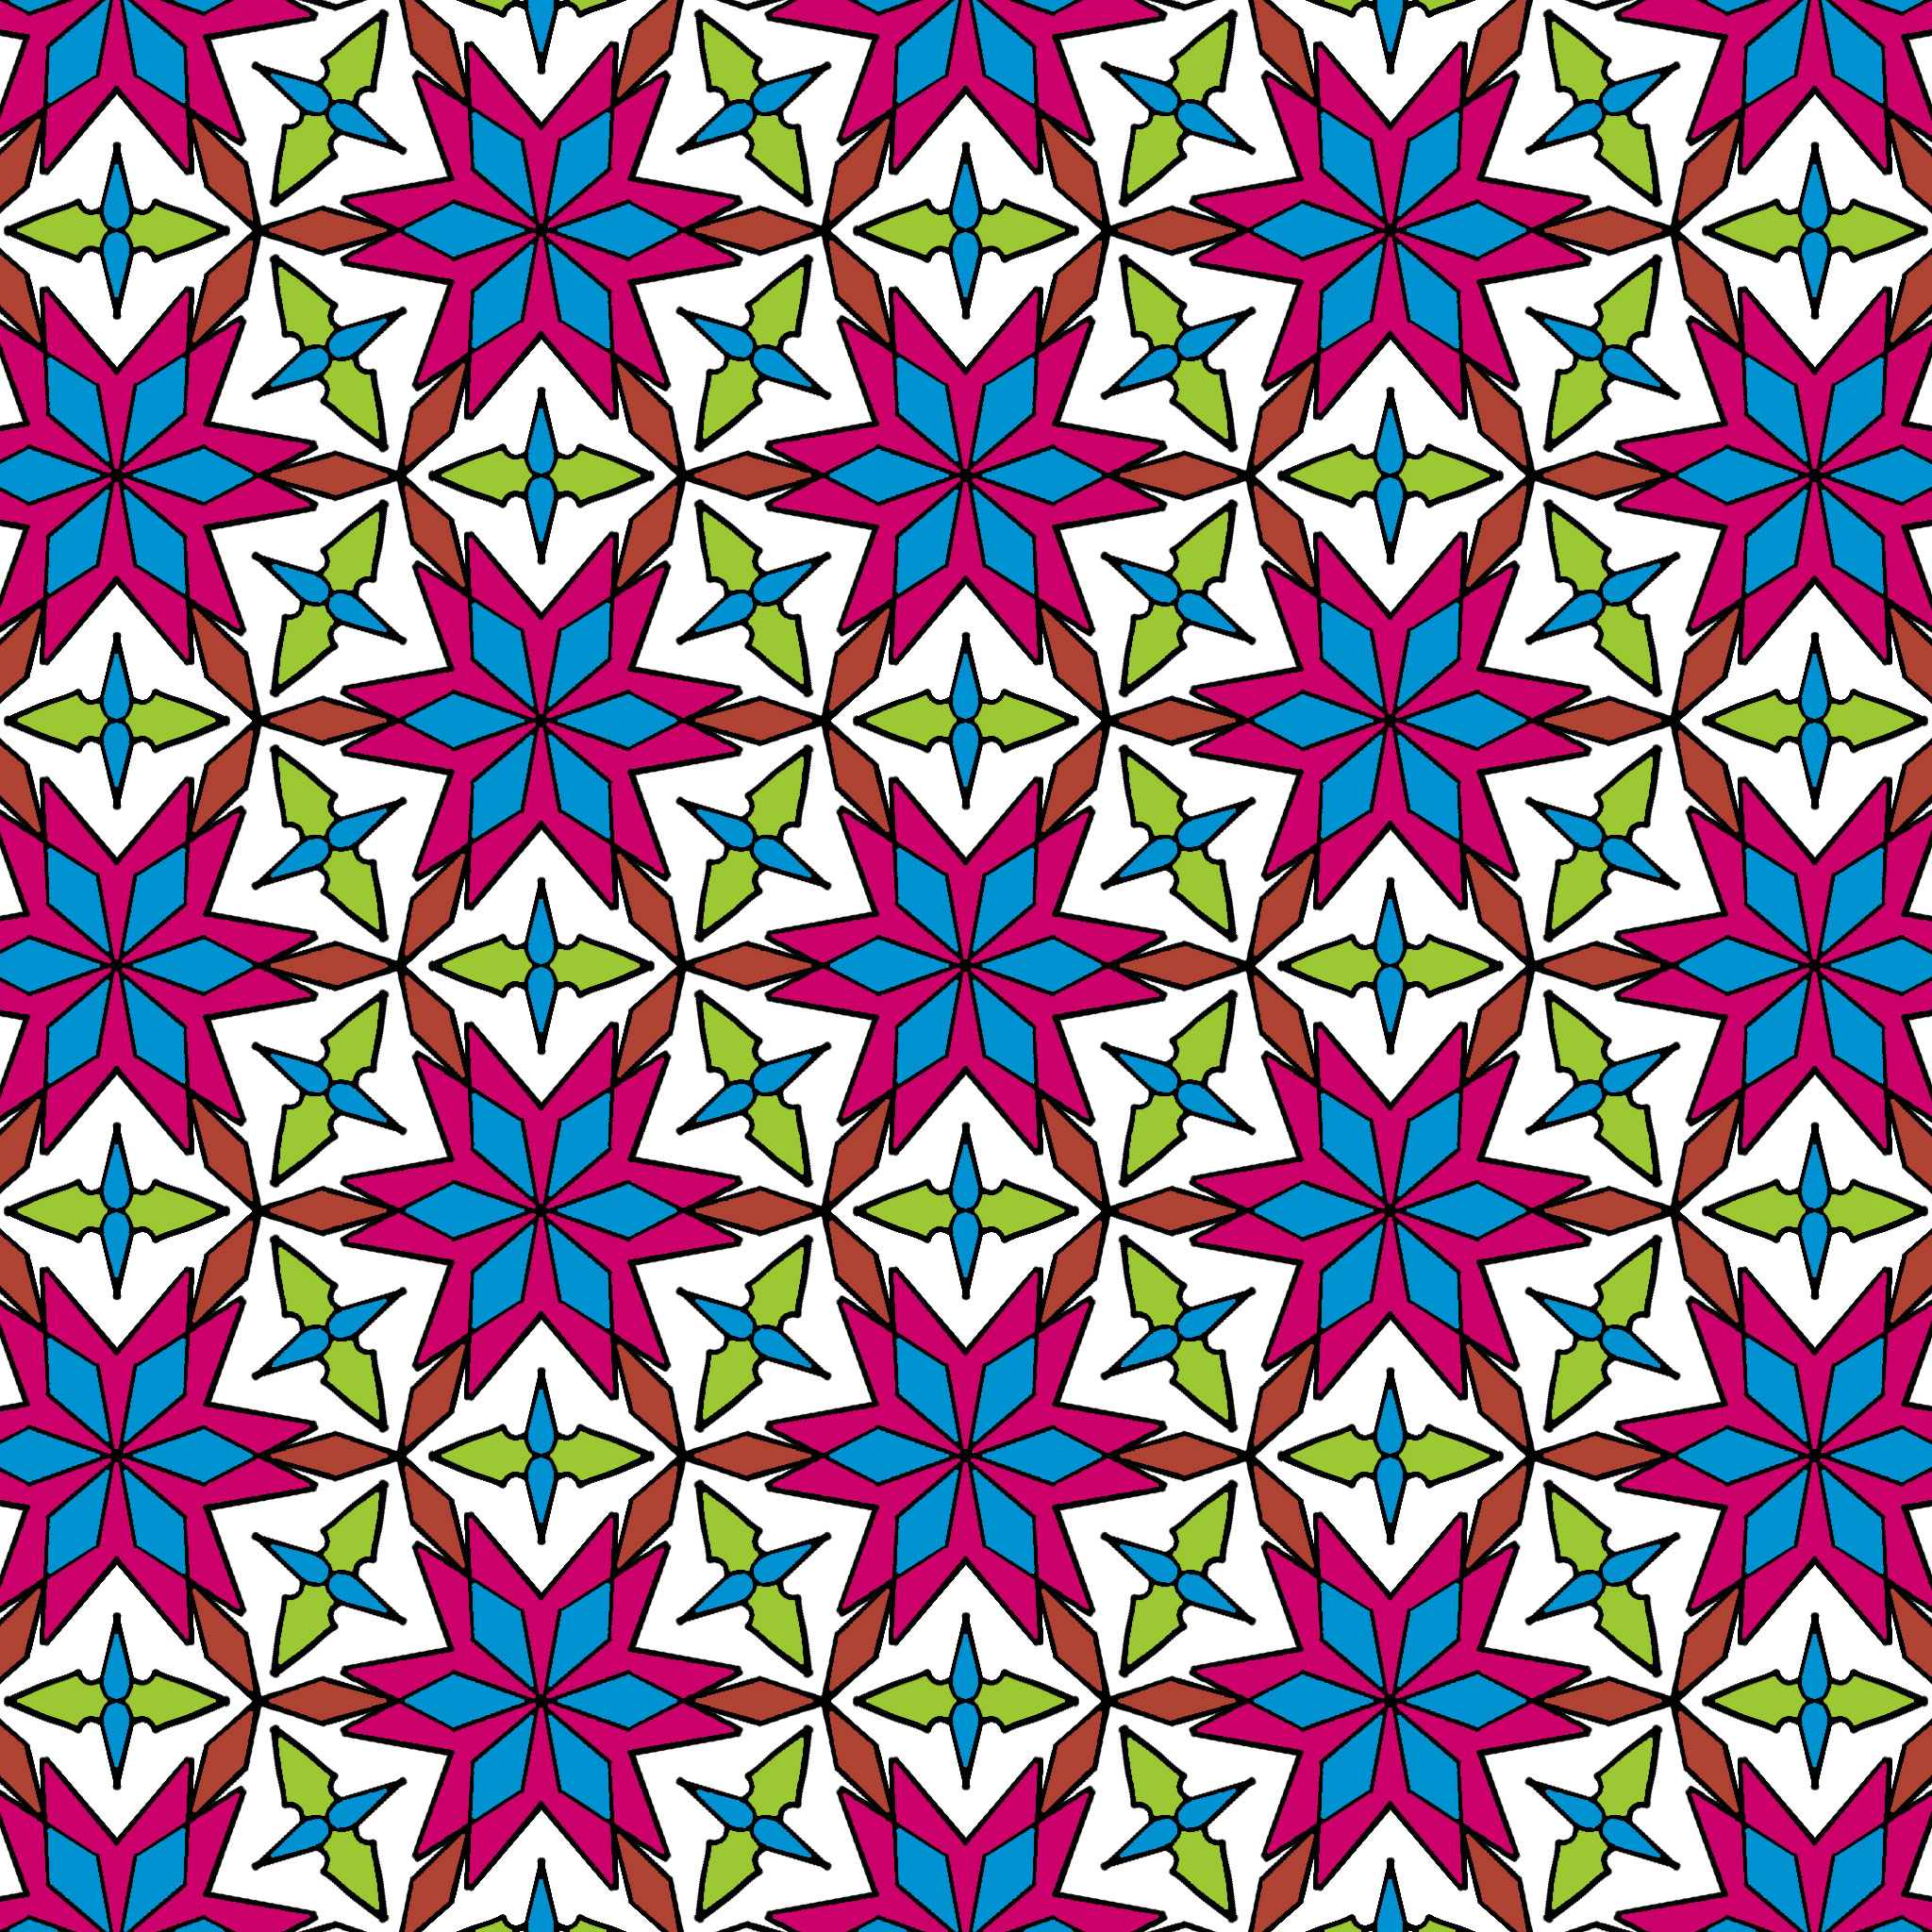 redish pattern background free download